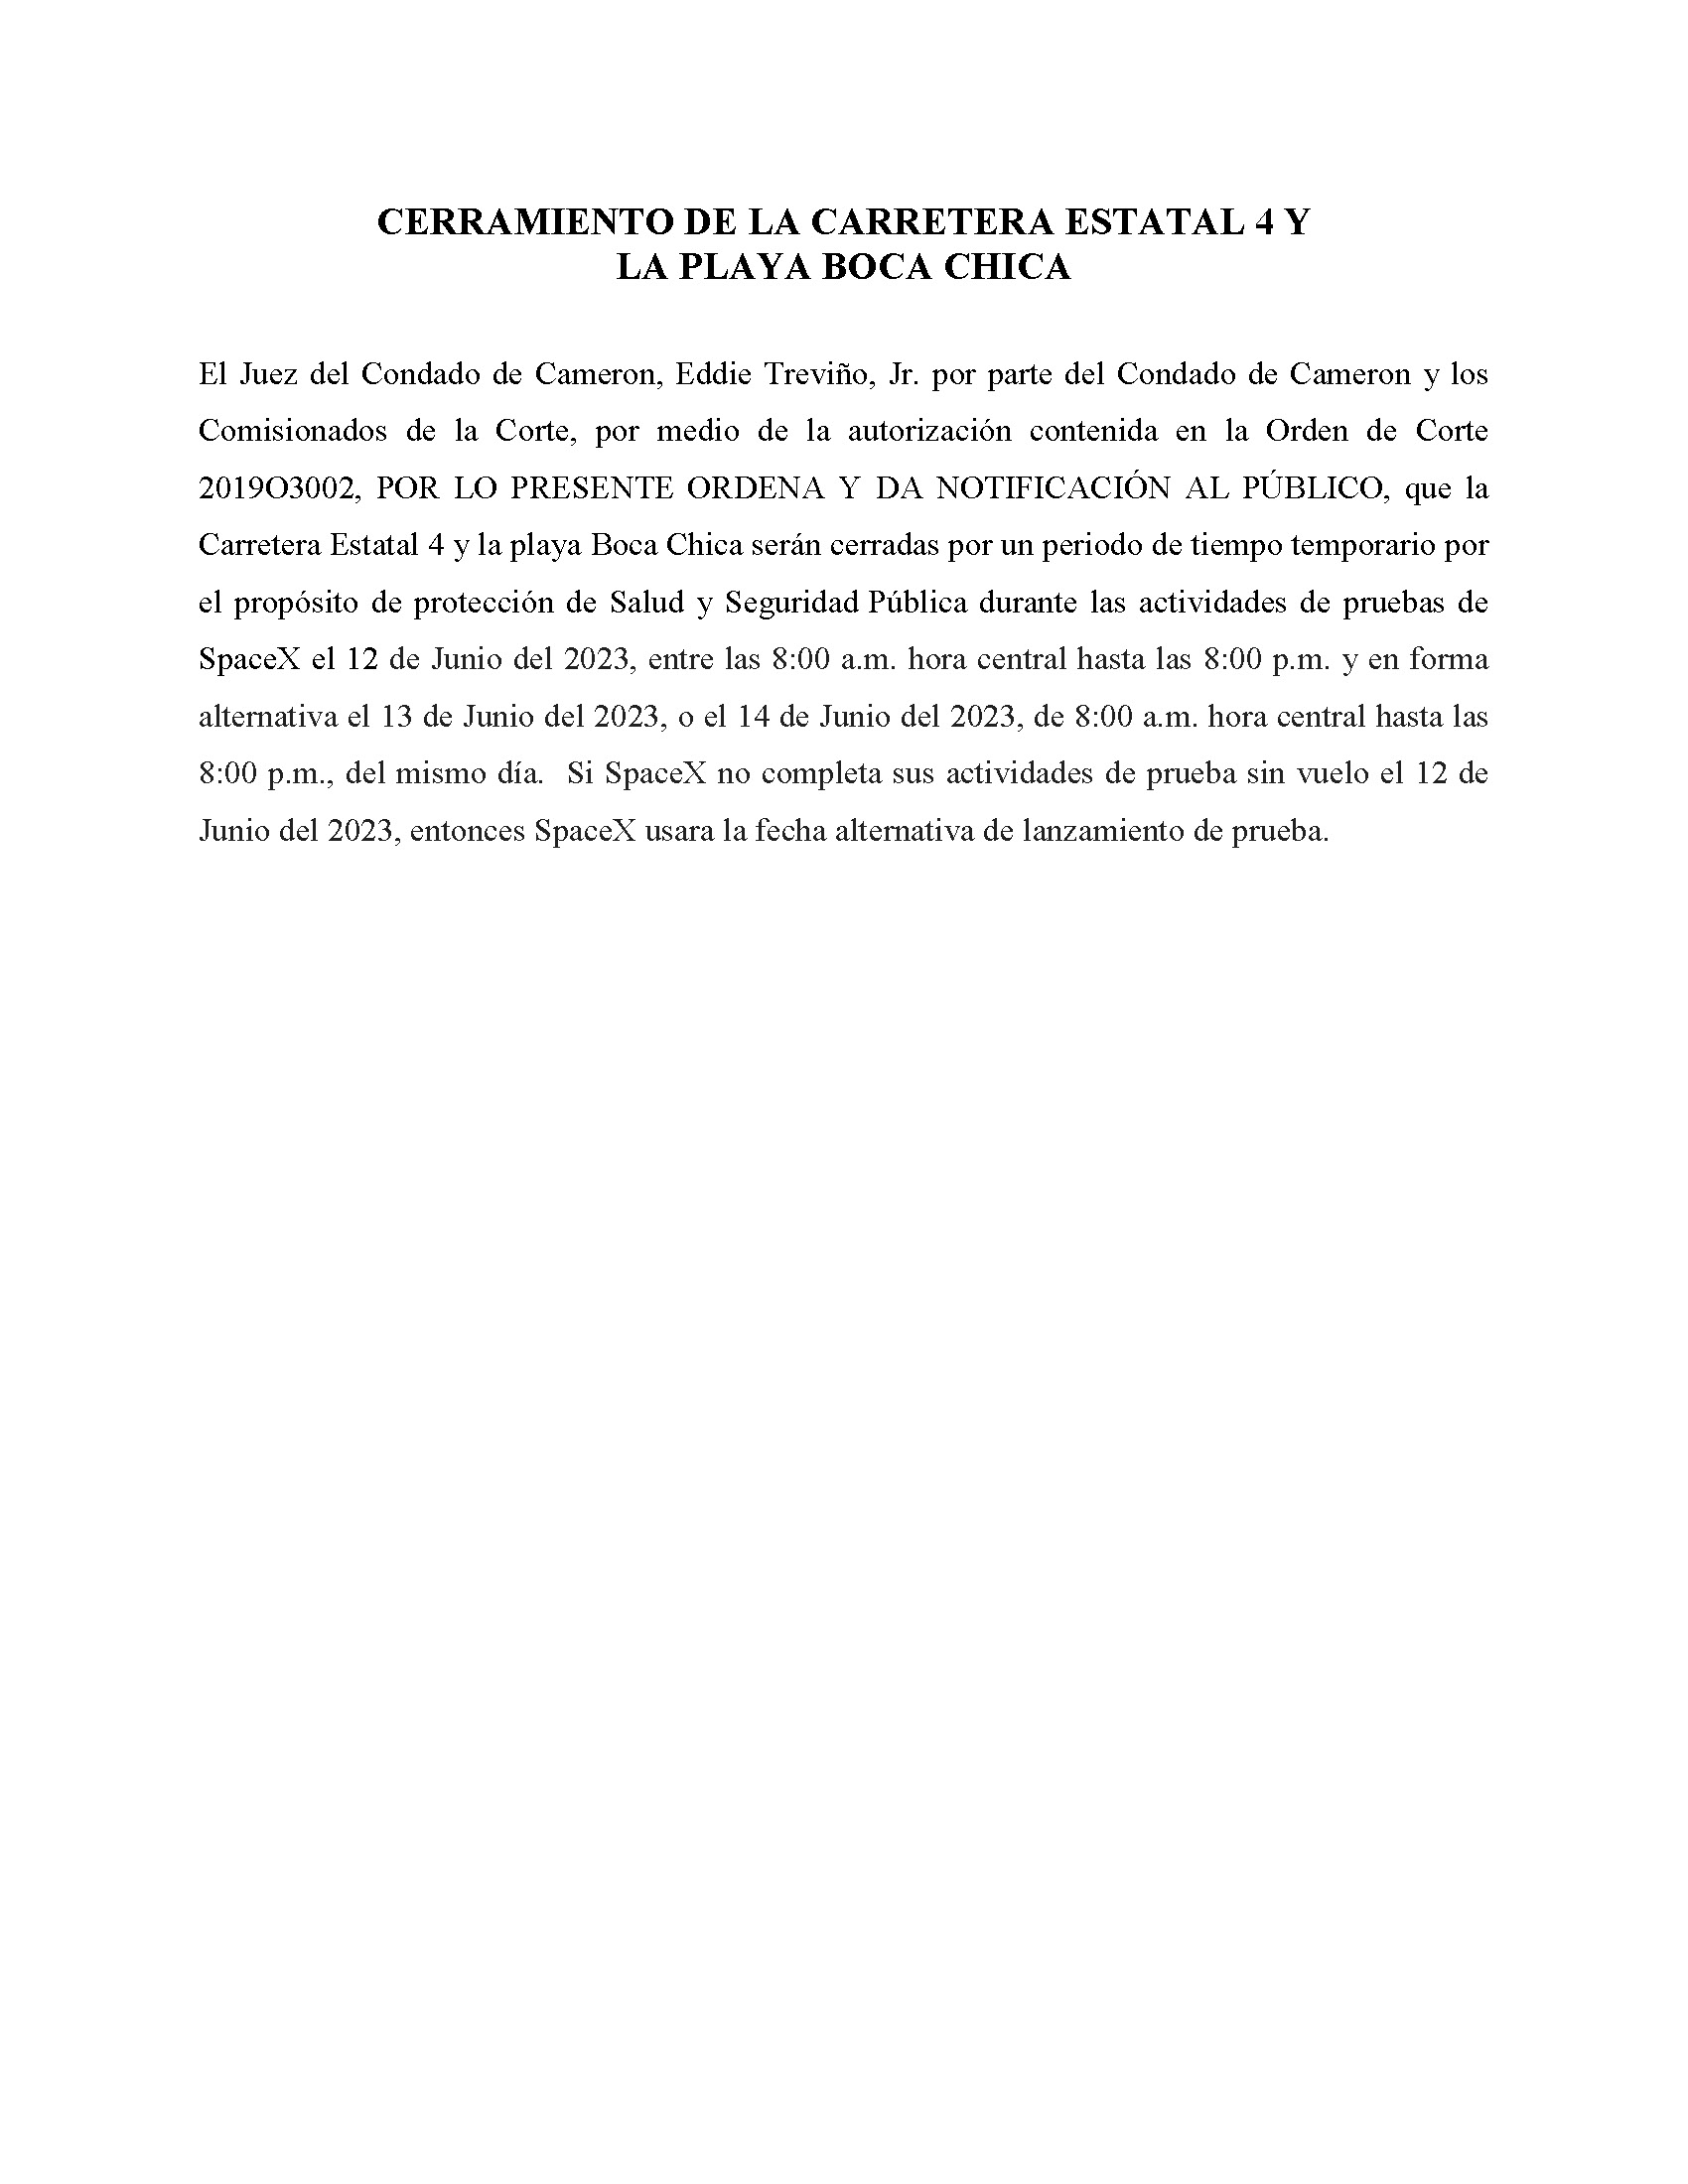 ORDER.CLOSURE OF HIGHWAY 4 Y LA PLAYA BOCA CHICA.SPANISH.06.12.23 002